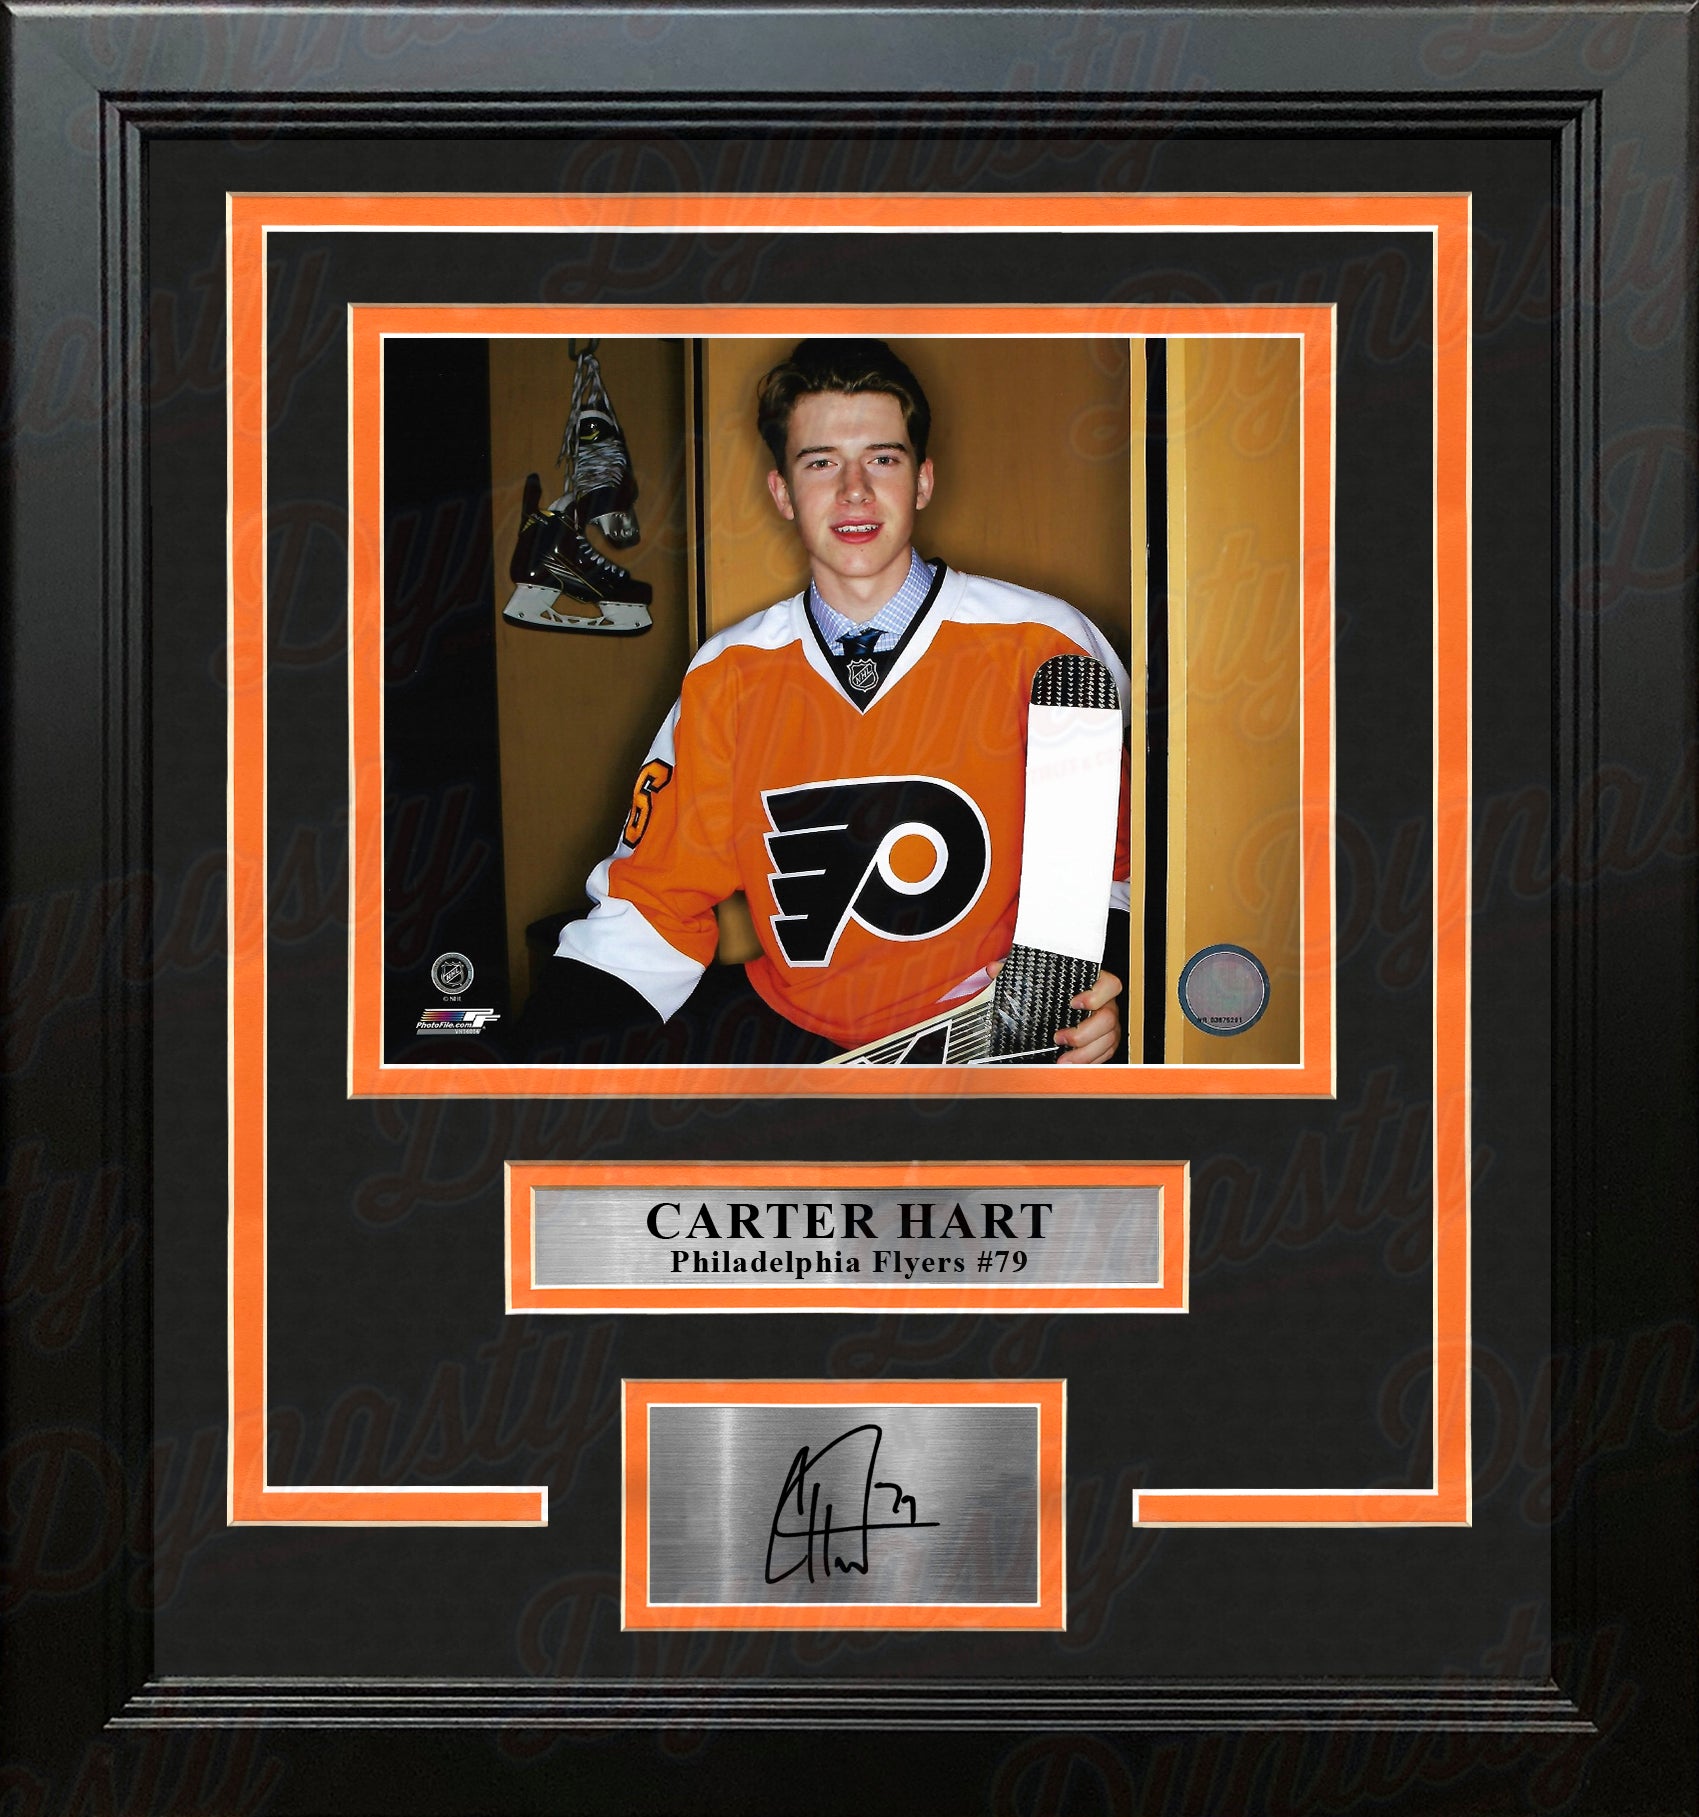 Carter Hart Philadelphia Flyers Locker Room Framed Hockey Photo with Engraved Autograph - Dynasty Sports & Framing 